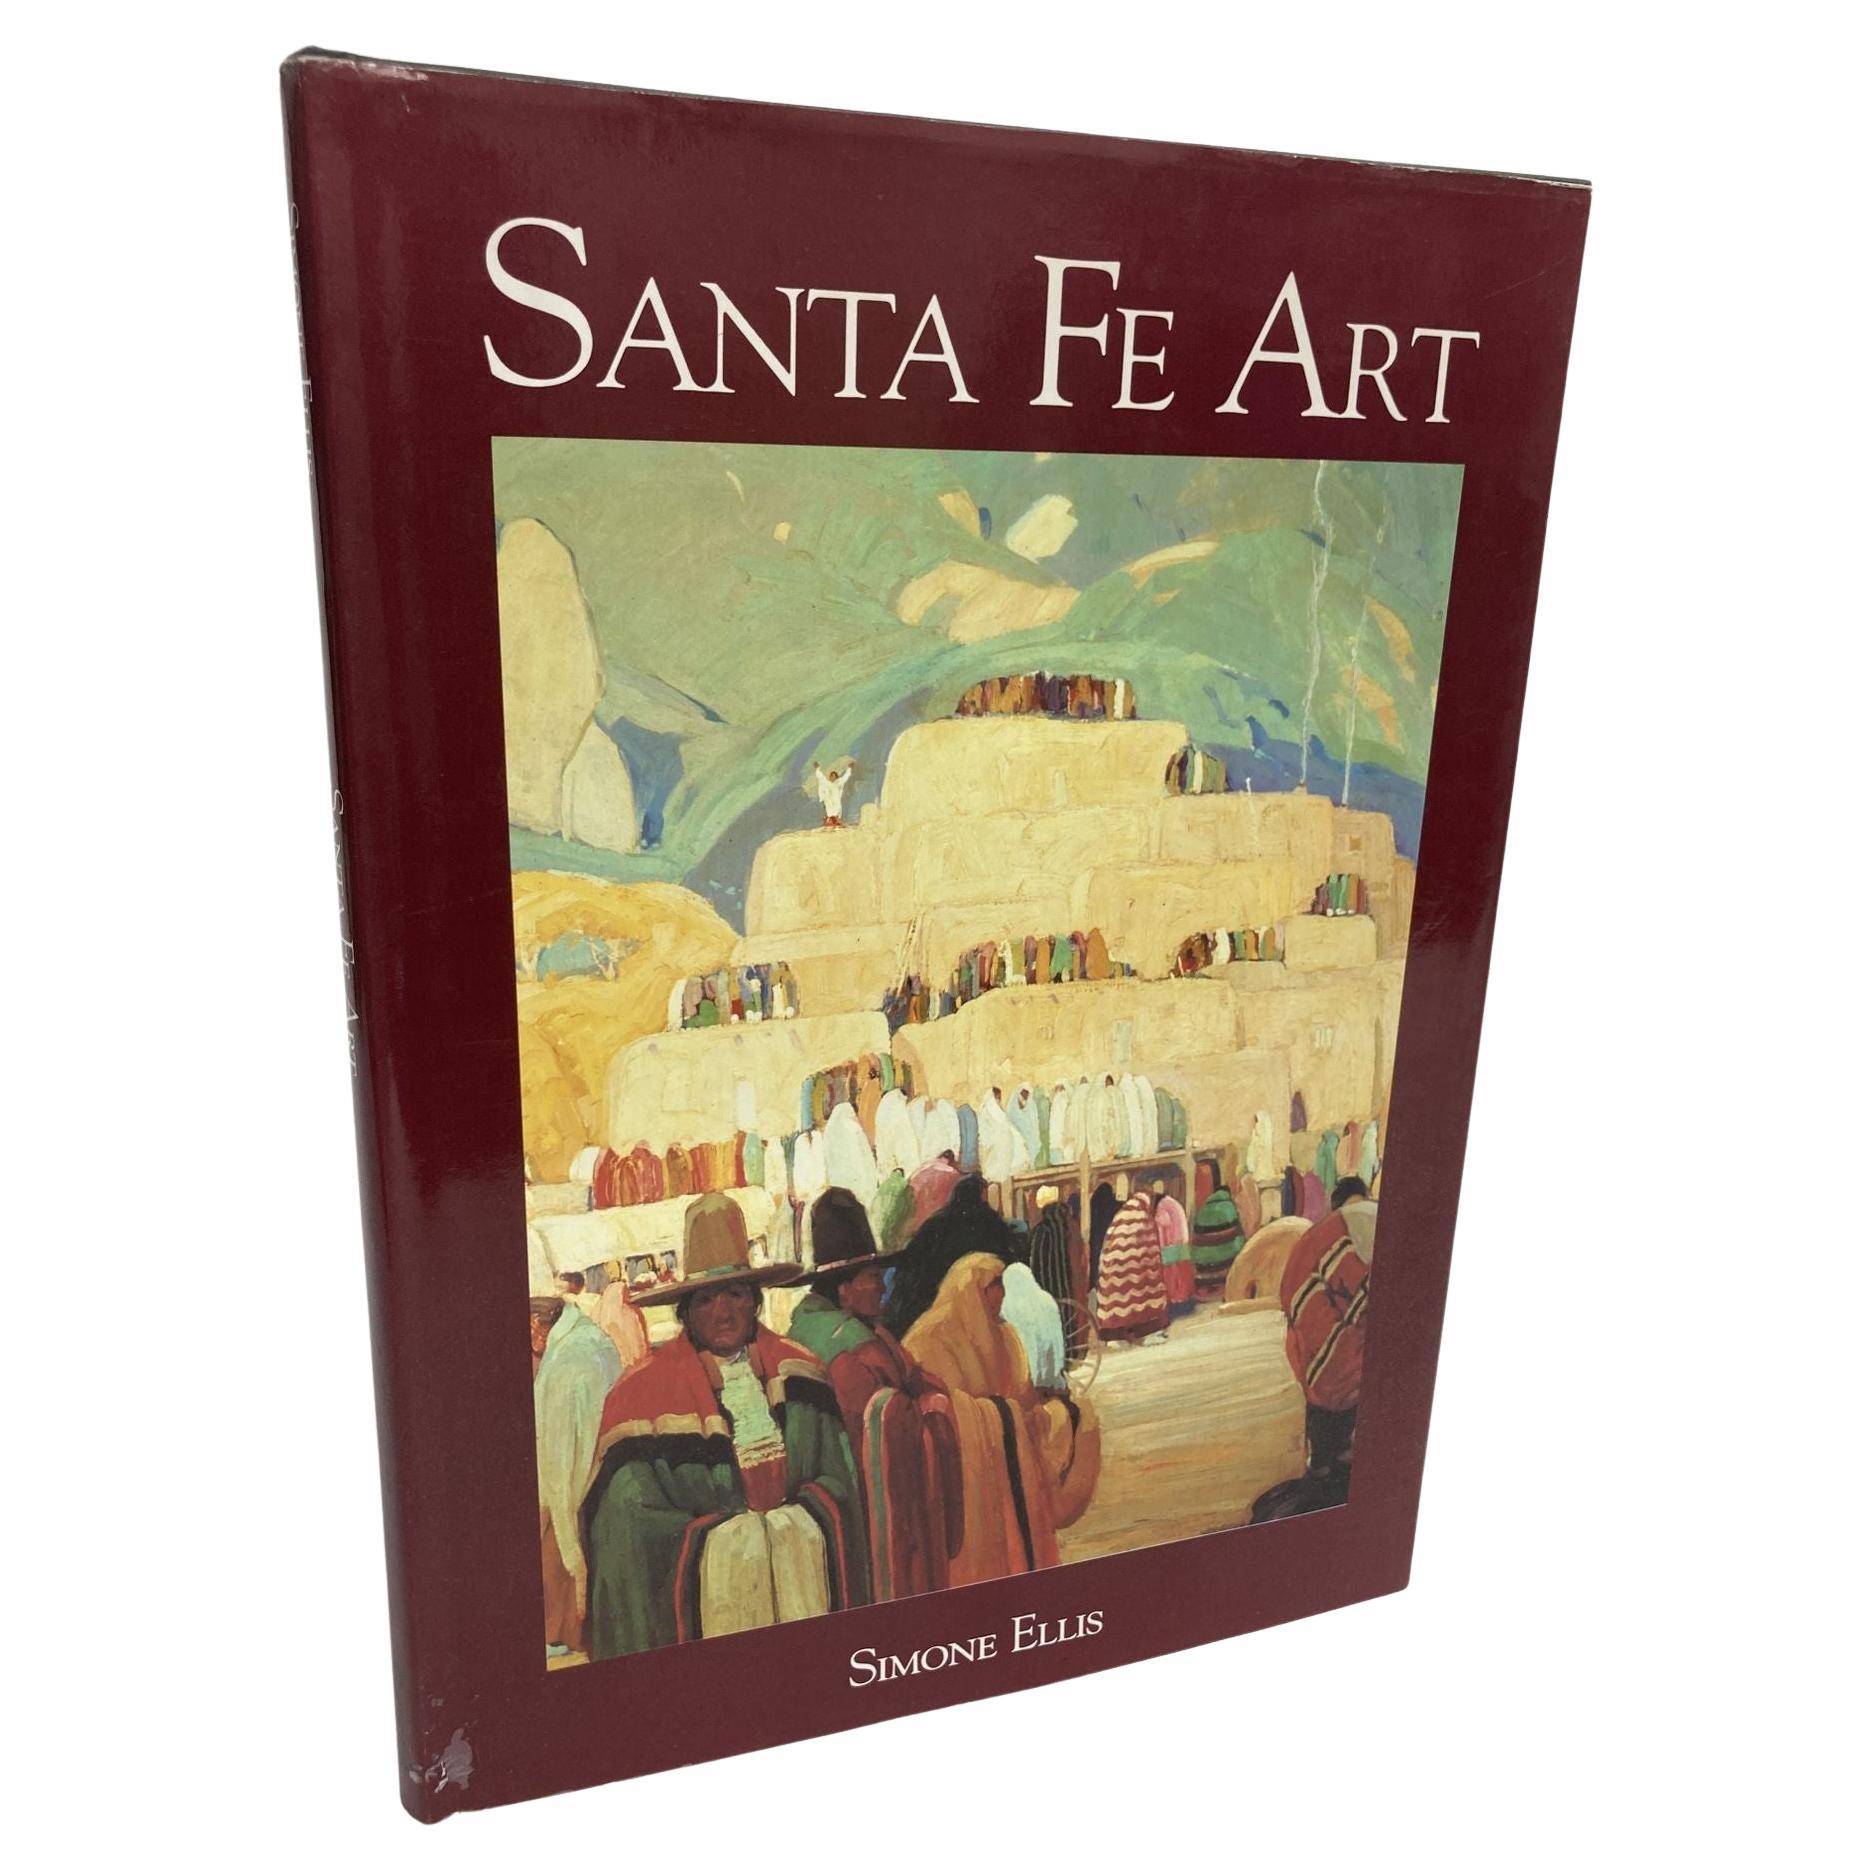 Santa Fe Art. Ellis, Simone, Published by Crescent Books., New York., 1993 Large